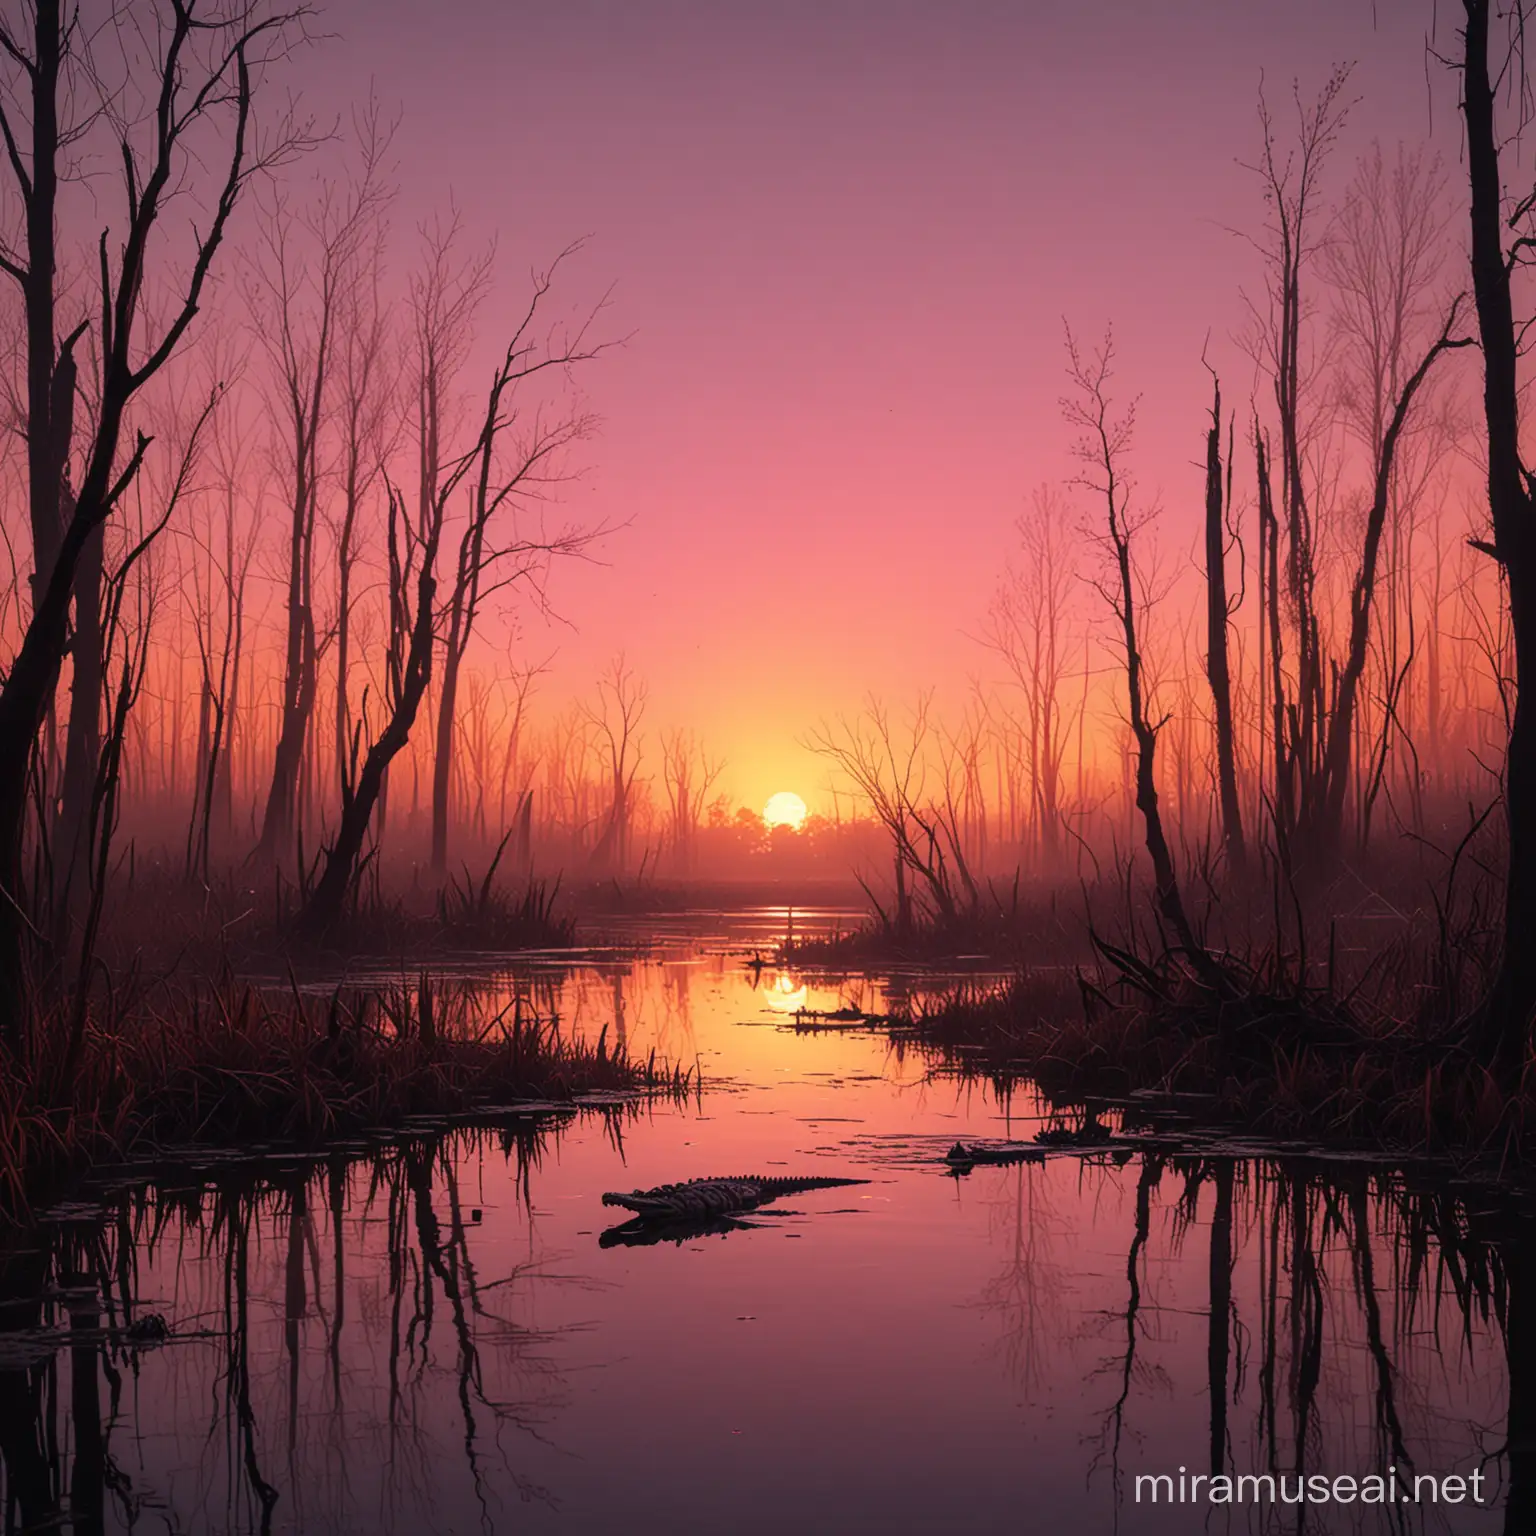 Sunset Hues Hidden Crocodile in a Pixelated Swamp